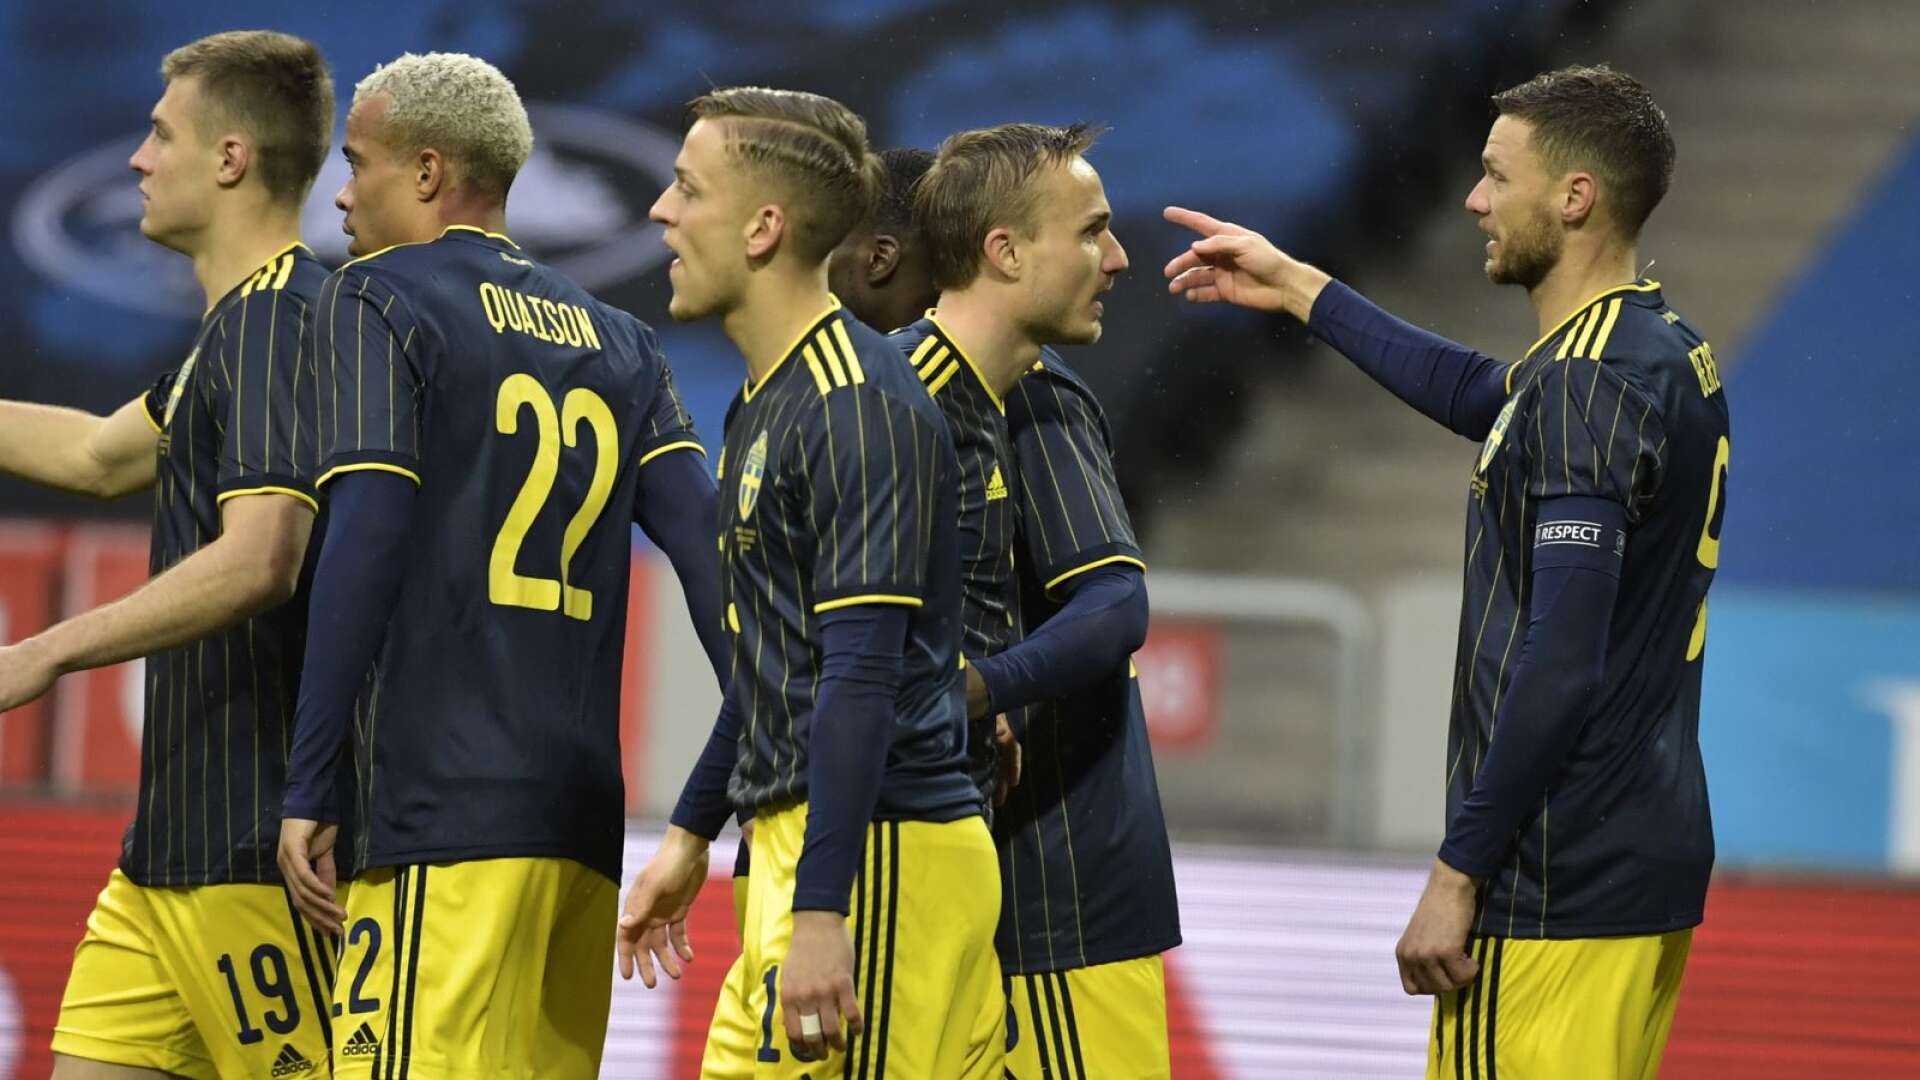 Marcus Bergs 23:e mål i landslaget kom redan efter tre minuter mot Estland.